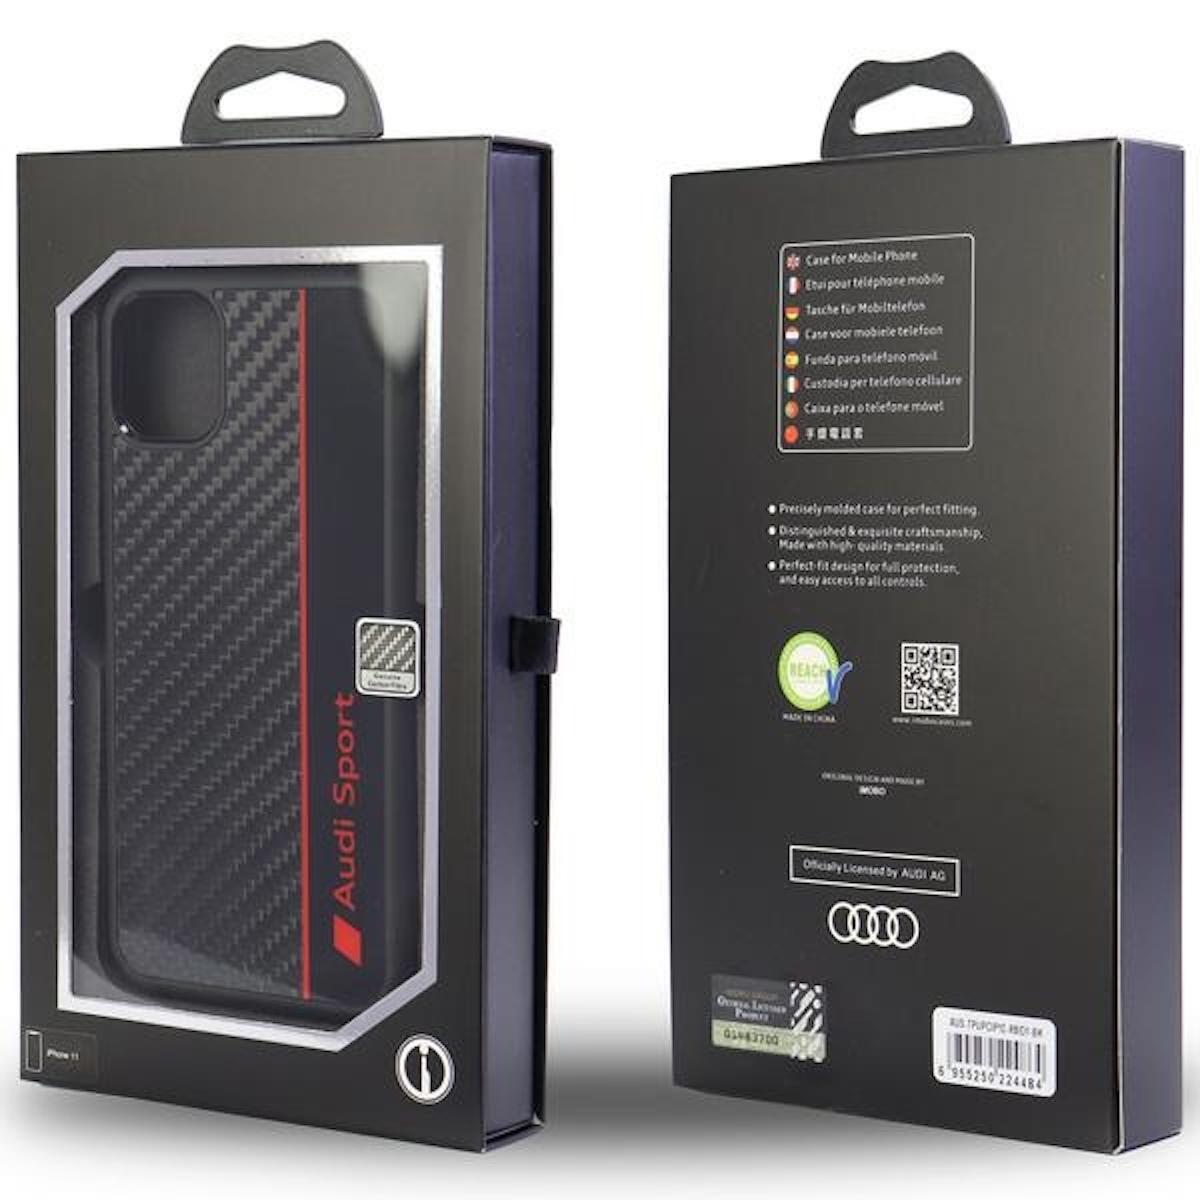 12 Schwarz Carbon Faserstreifen iPhone Pro, Tasche Hülle, Backcover, 12 Apple, / AUDI